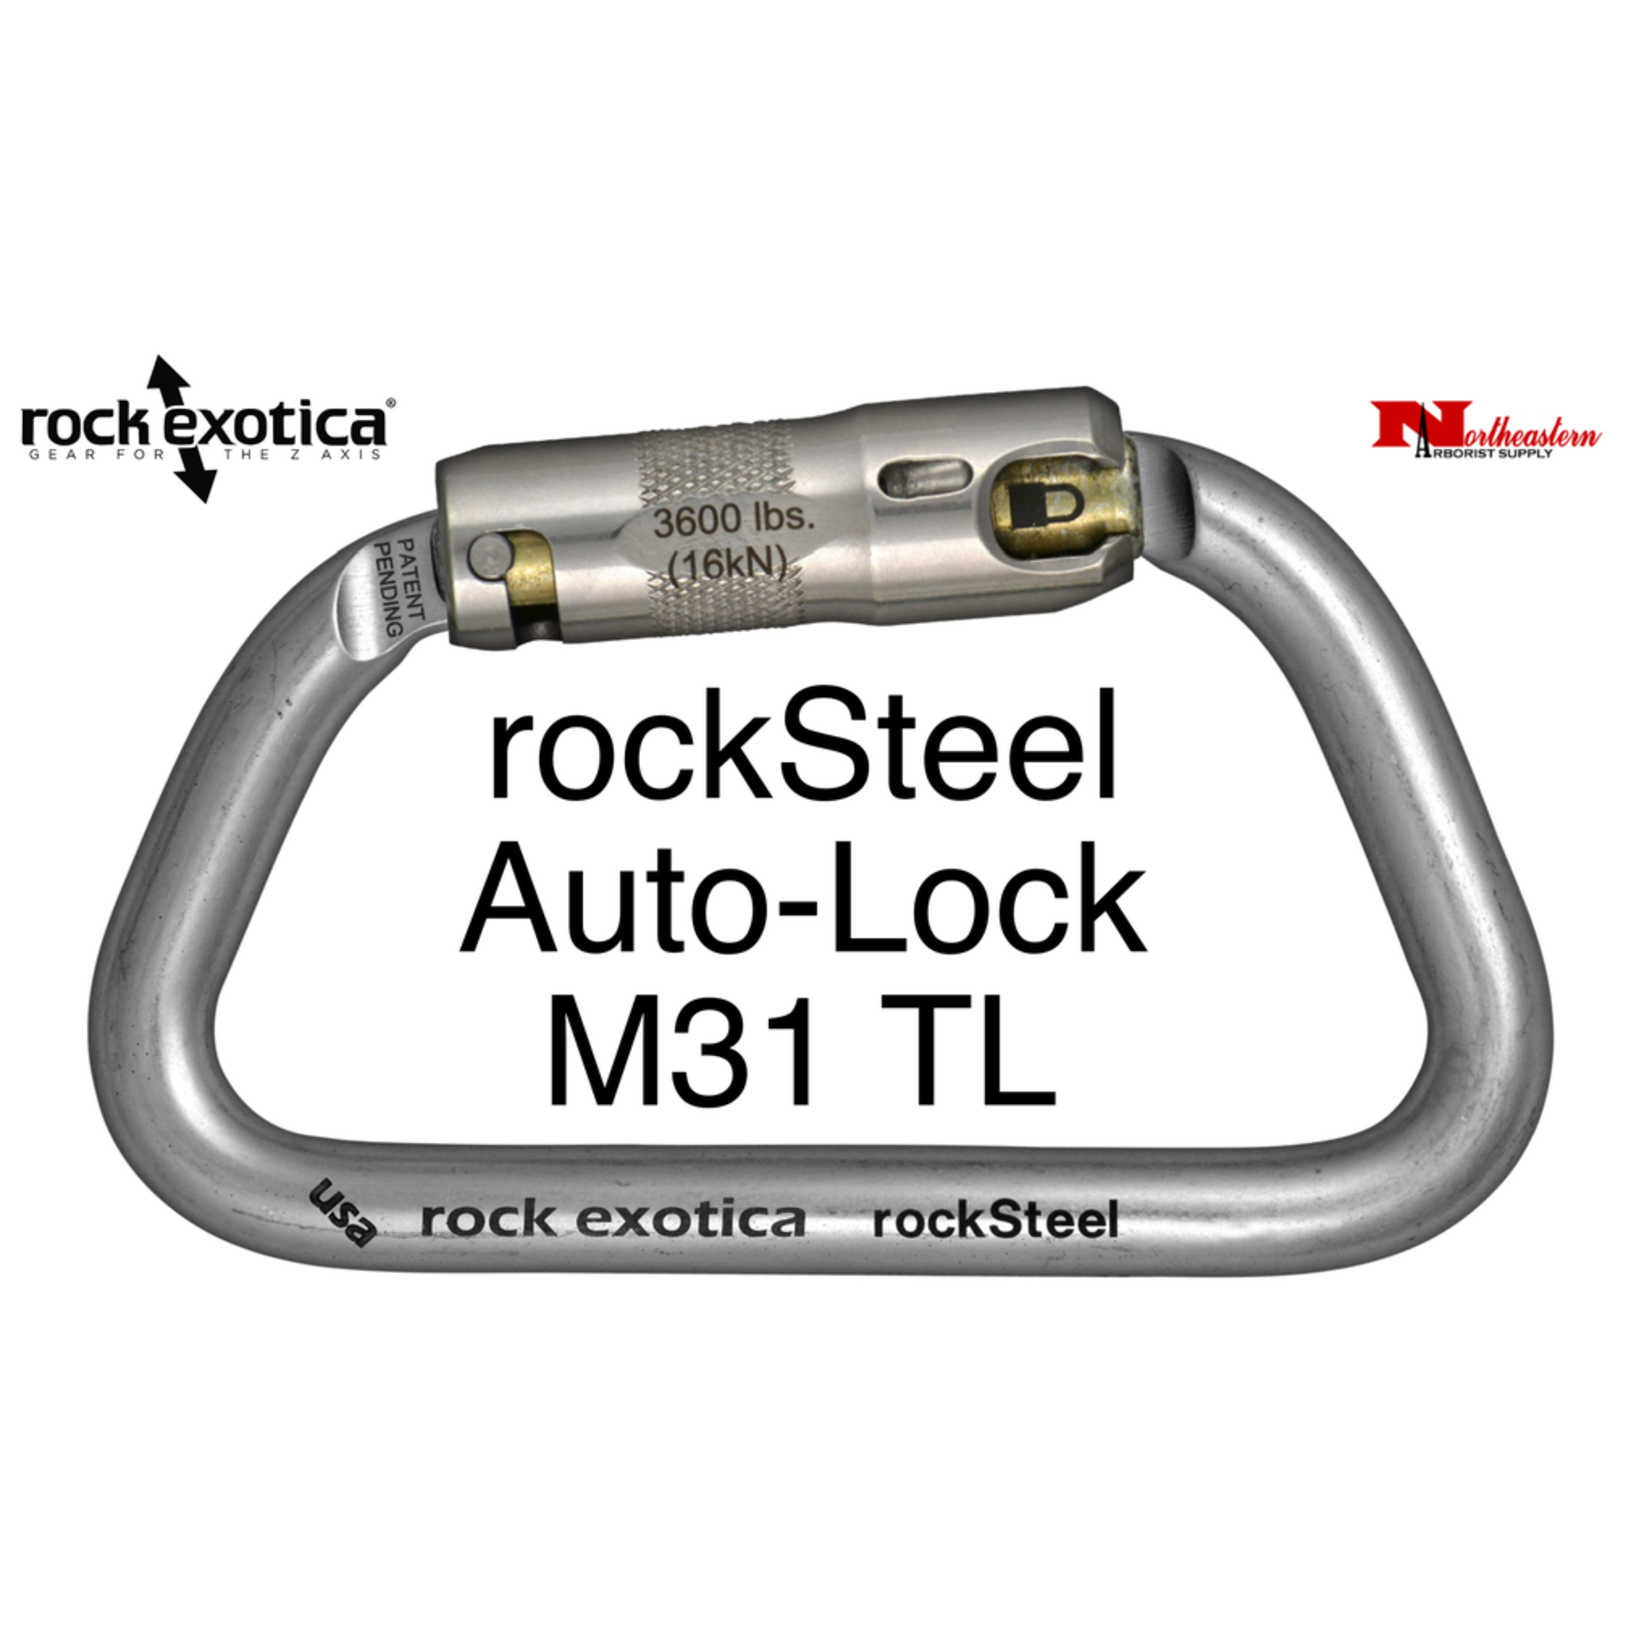 Rock Exotica Rocksteel Auto-Lock